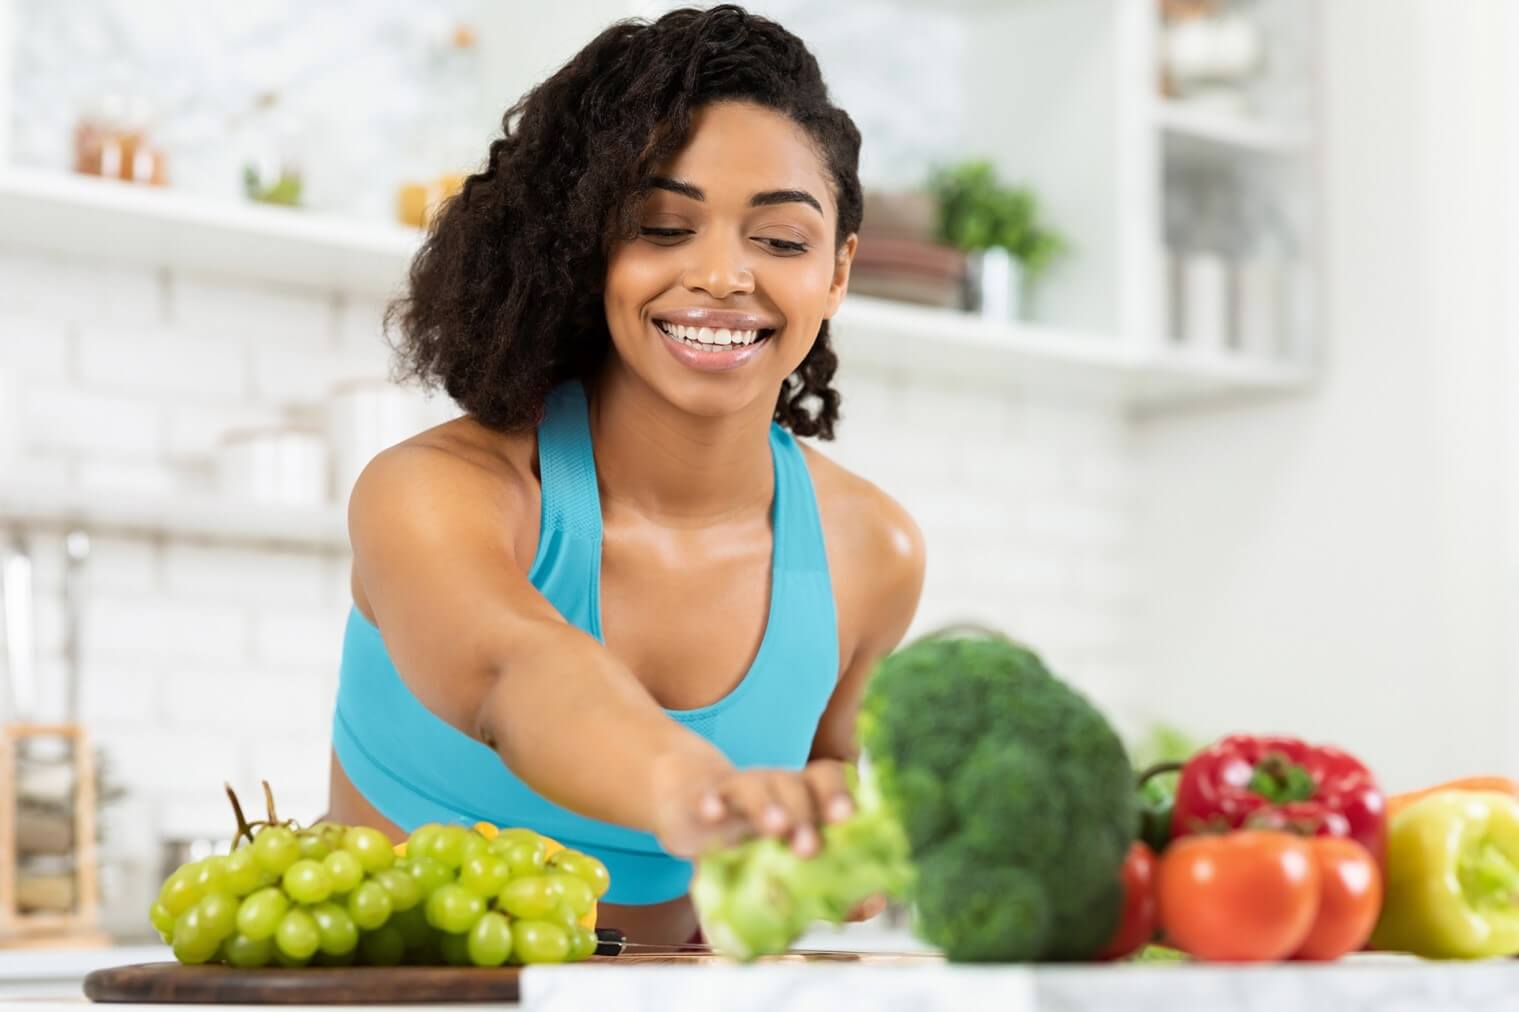 woman reaching for veggies in kitchen